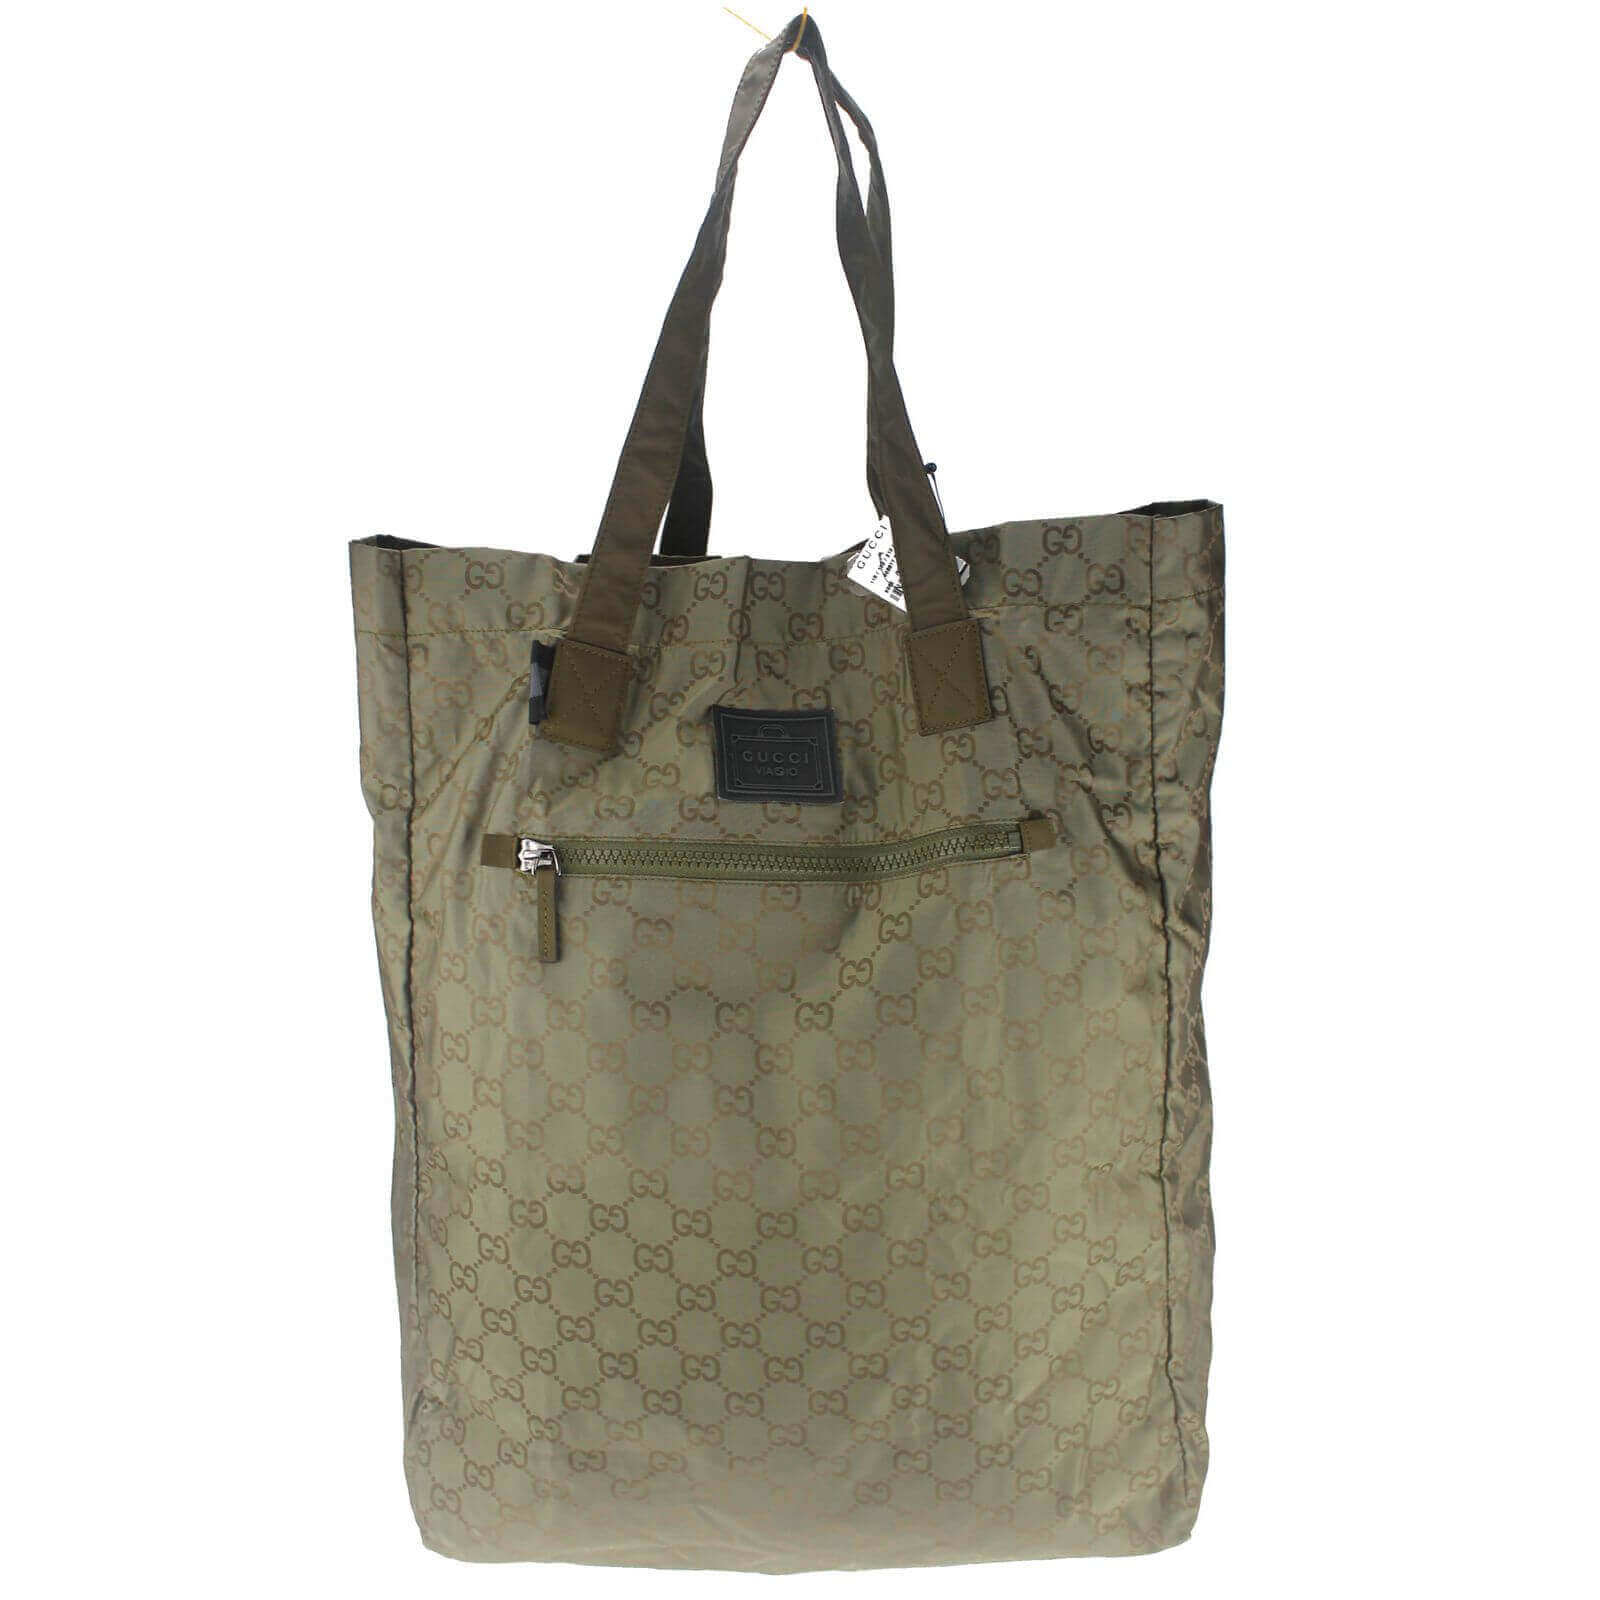 Gucci Tote Bag Sale | GG Nylon Viaggio Collection Green | BagBuyBuy